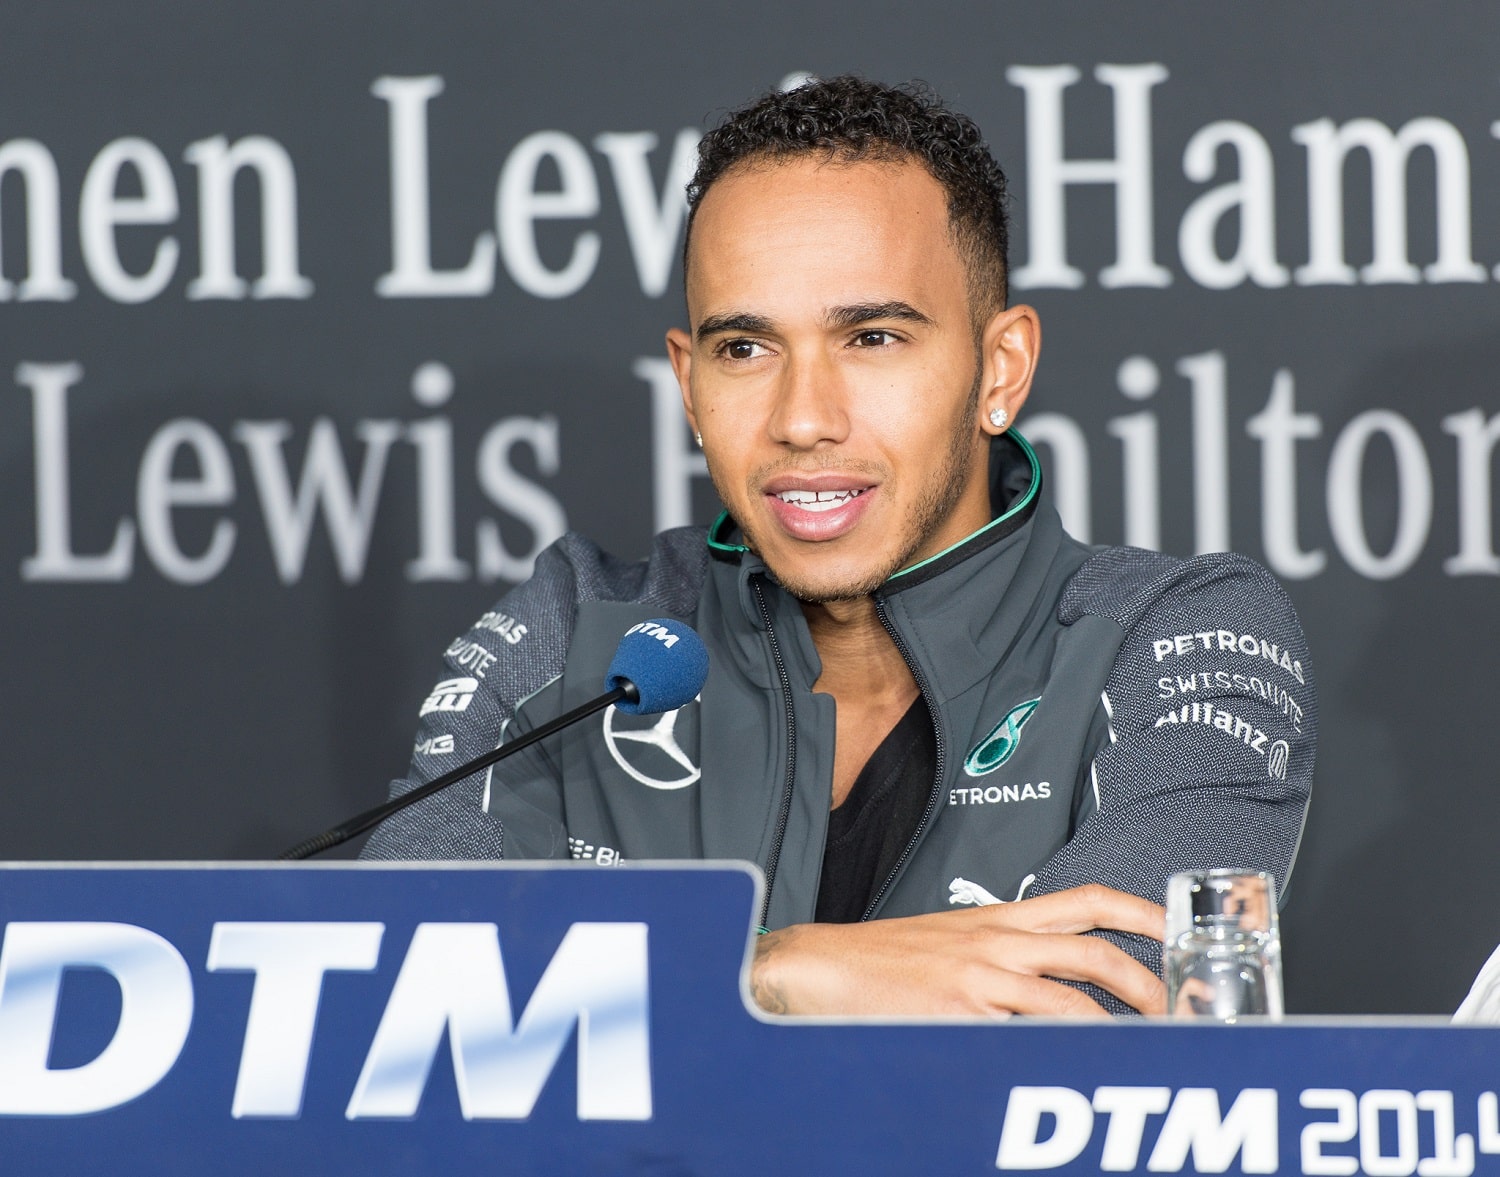 Did Lewis Hamilton Have a Hair Transplant?